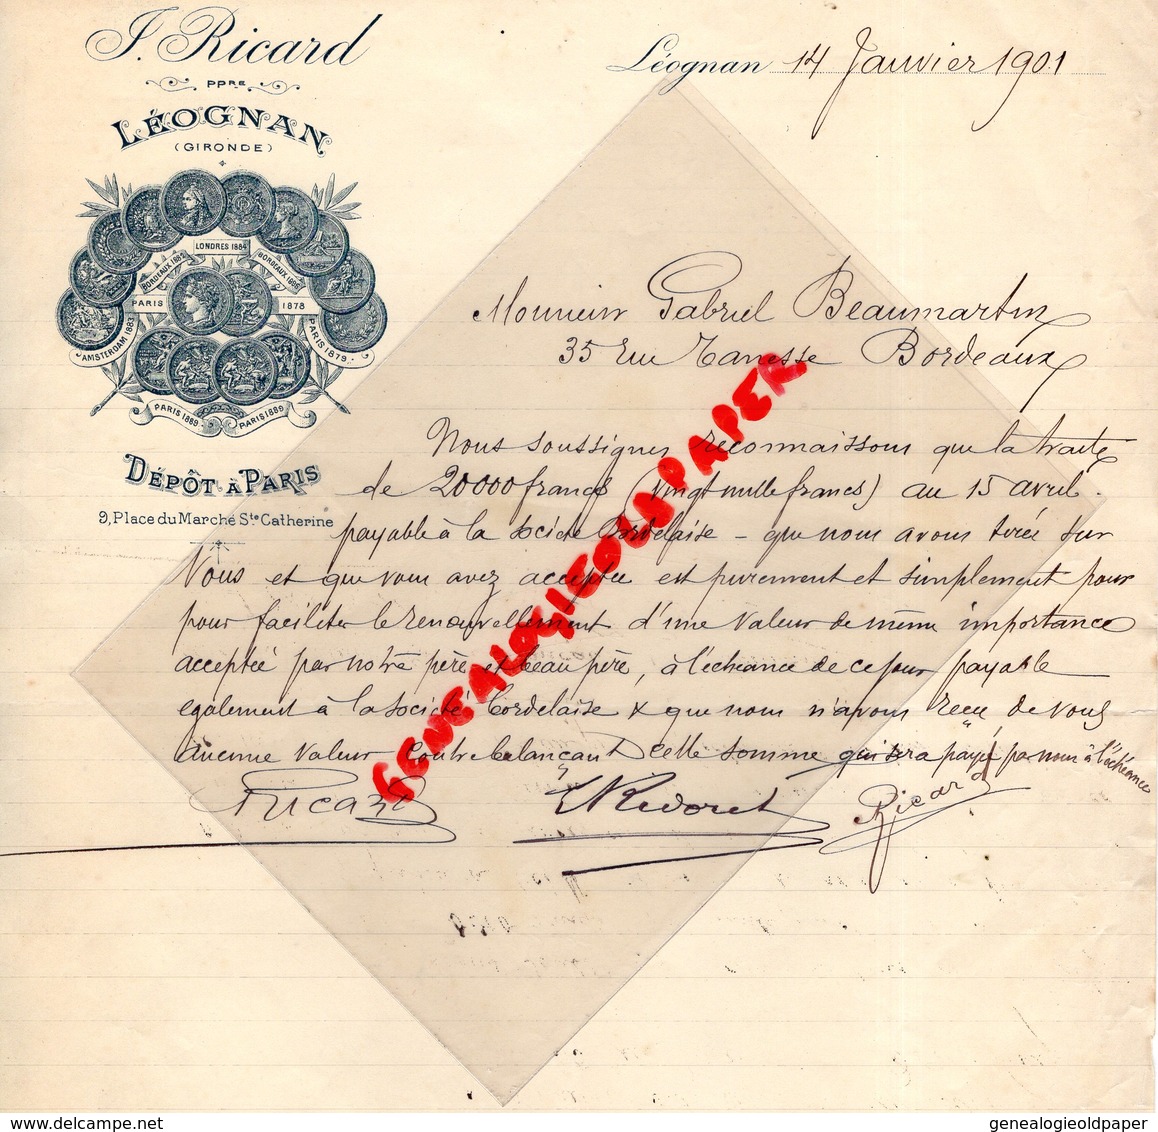 33-  LEOGNAN- RARE LETTRE MANUSCRITE SIGNEE J. RICARD- PROPRIETAIRE - DEPOT A PARIS PLACE MARCHE SAINTE CATHEDRINE-1901 - Artigianato